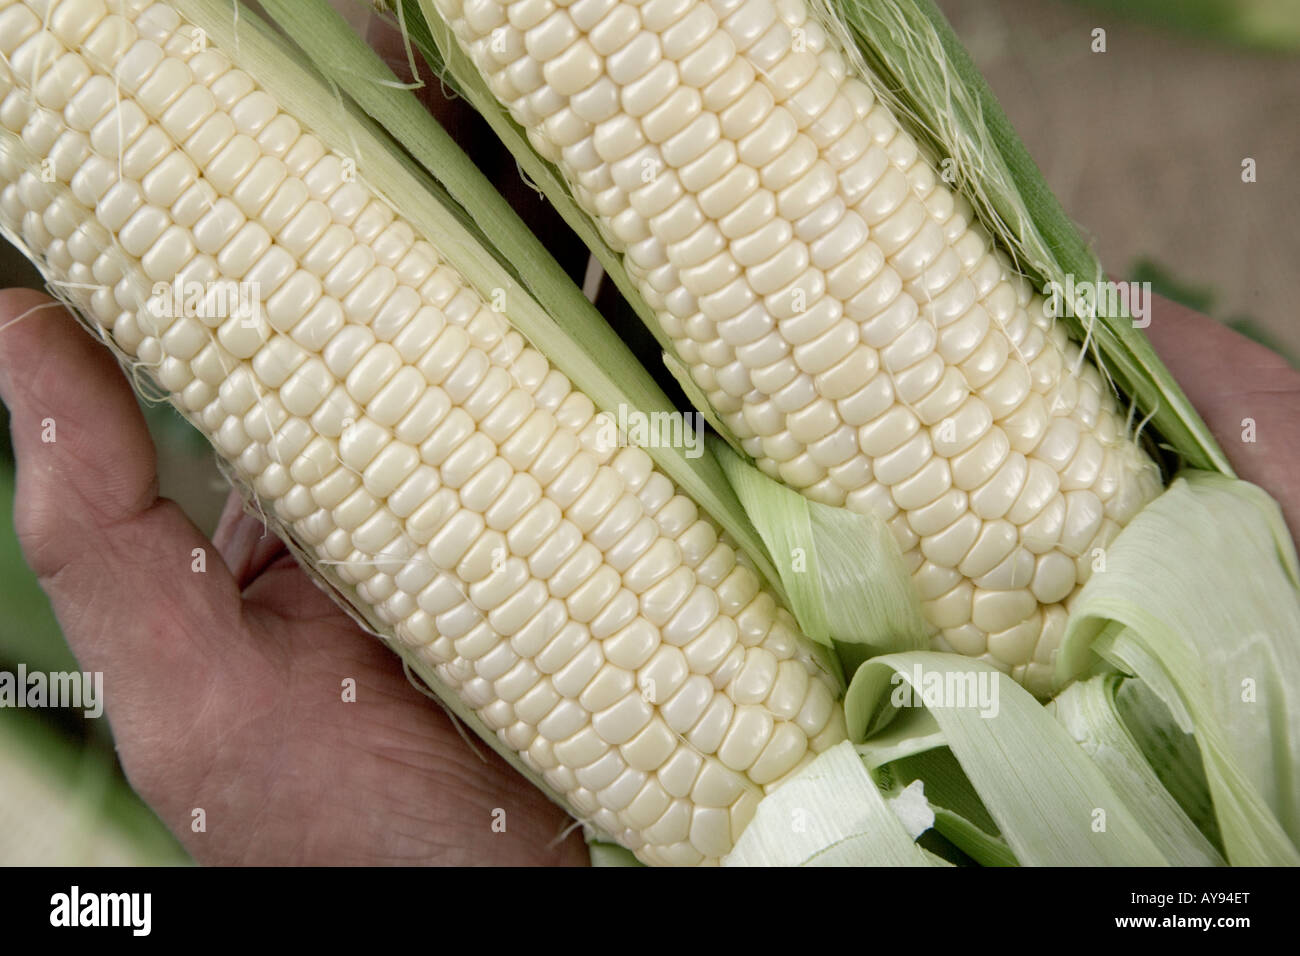 Hand displaying ears of white corn. Stock Photo